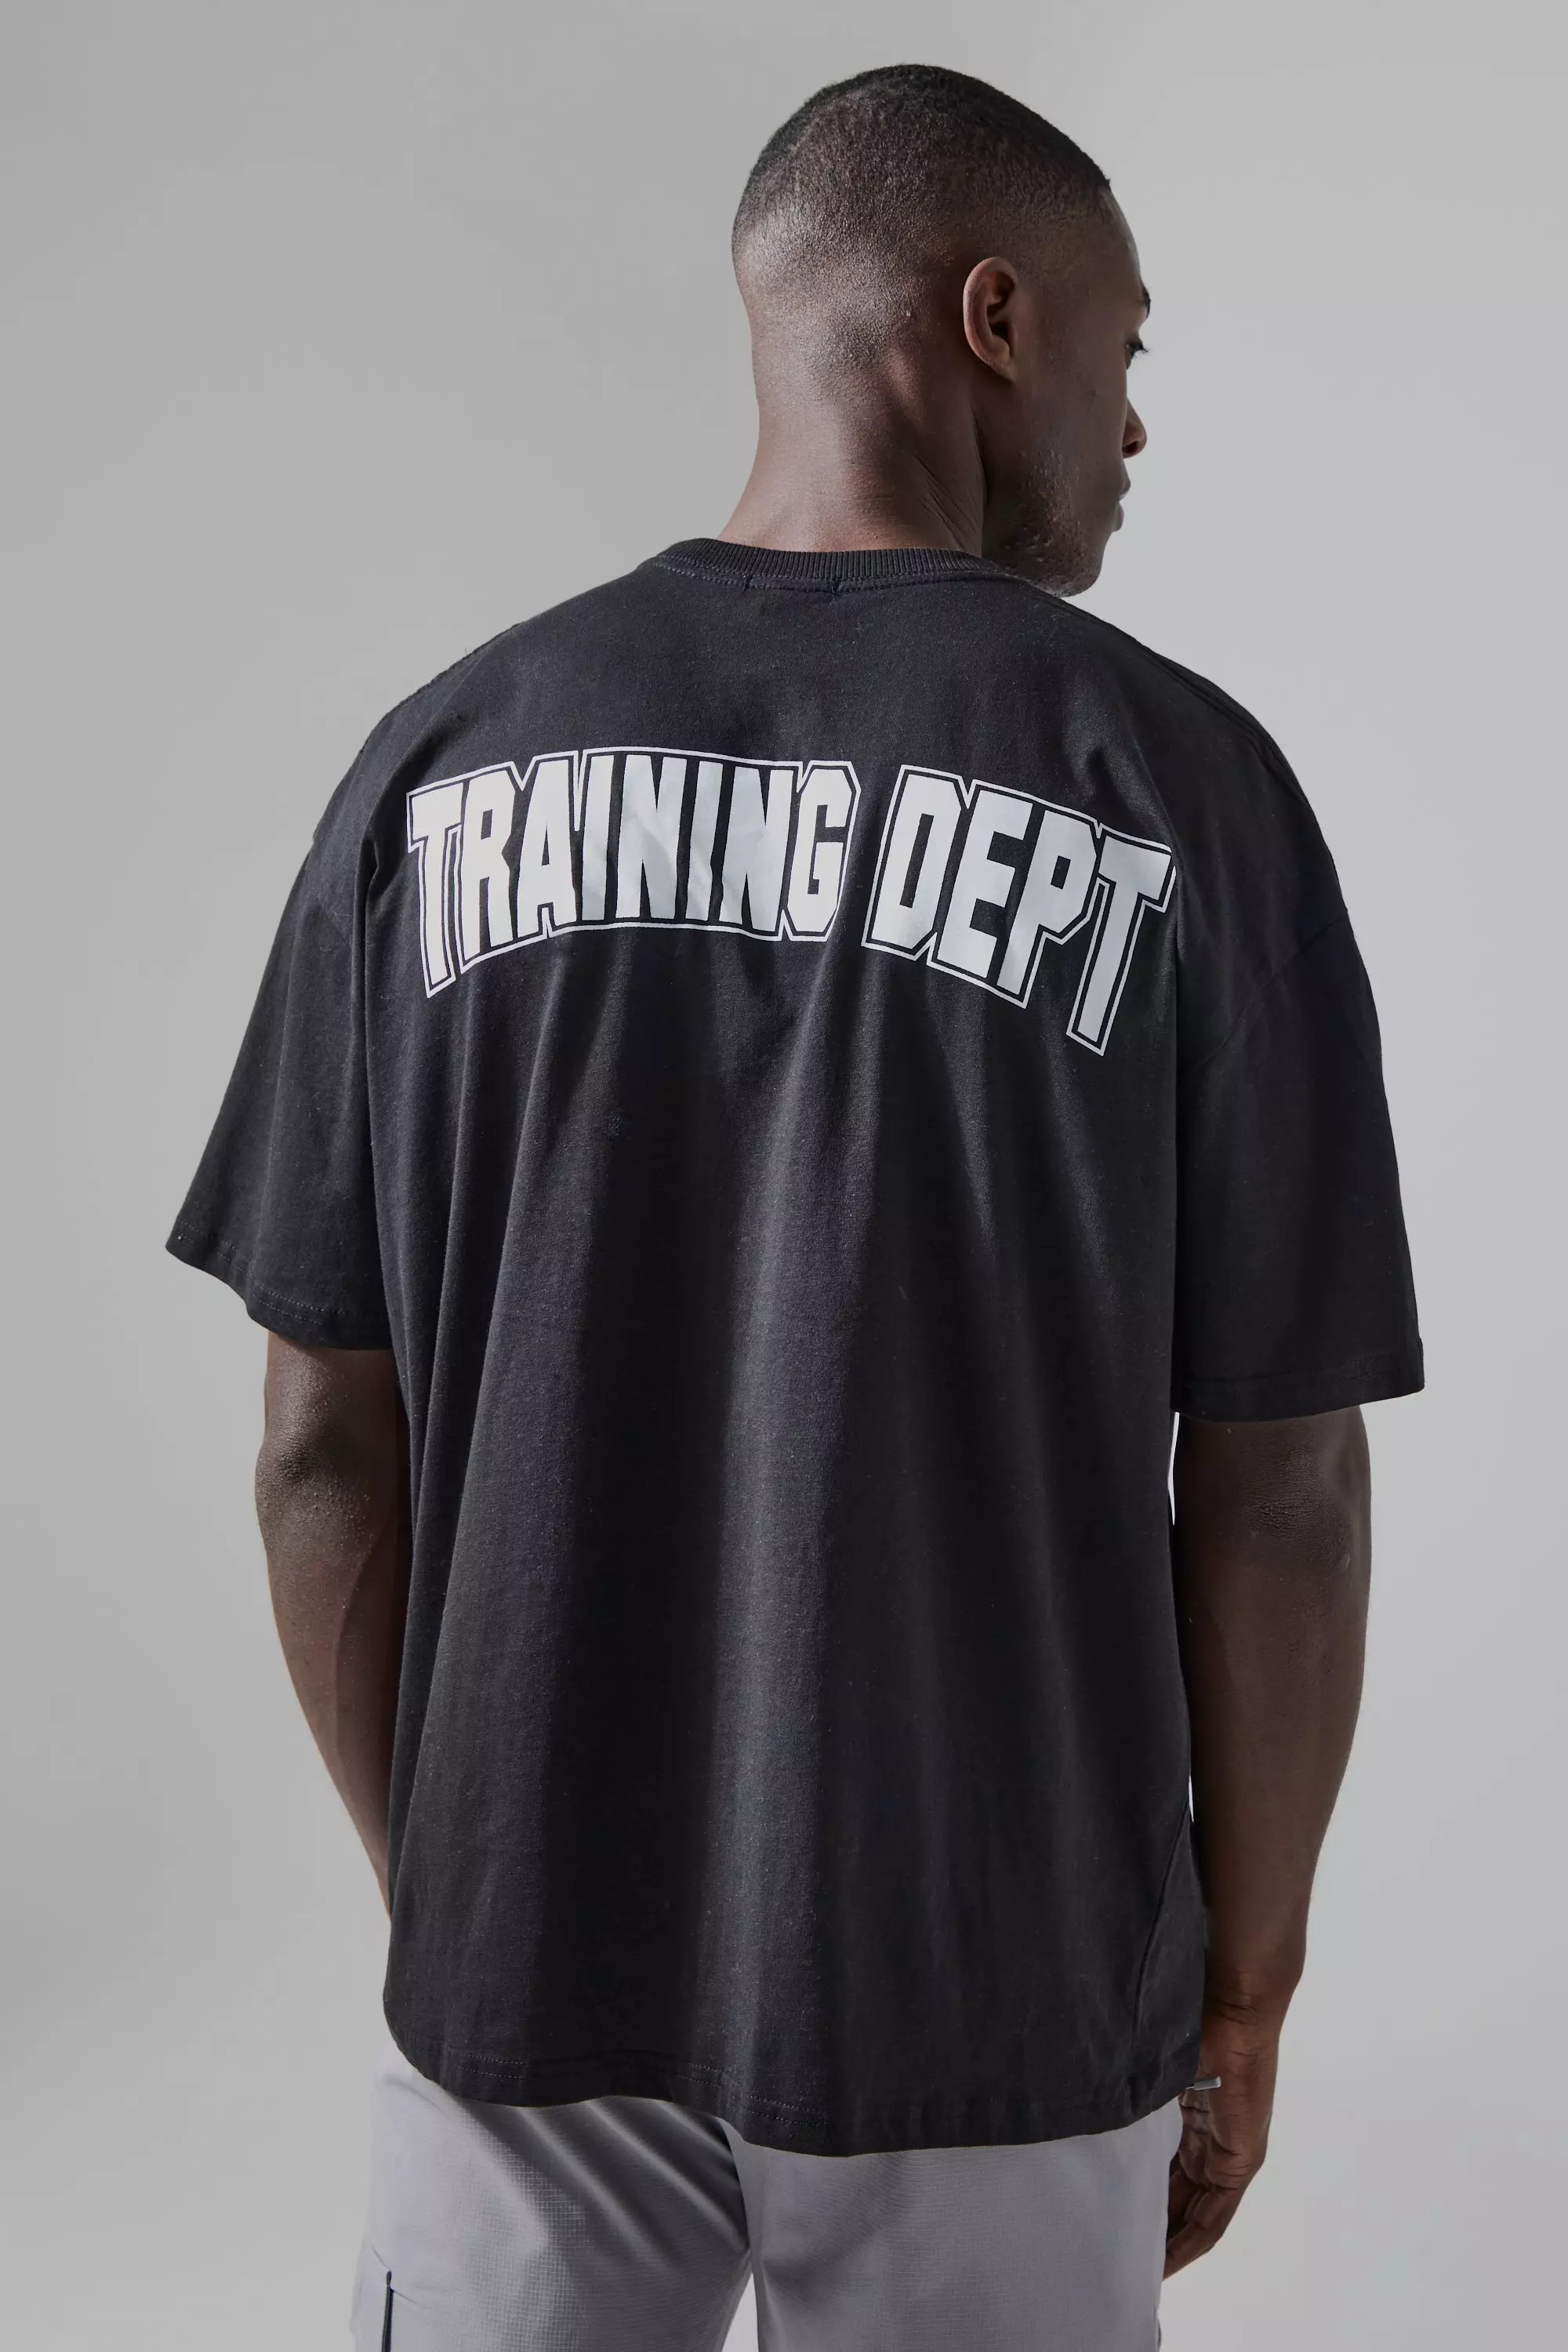 Active Training Dept Curved Print Oversized Tshirt Black